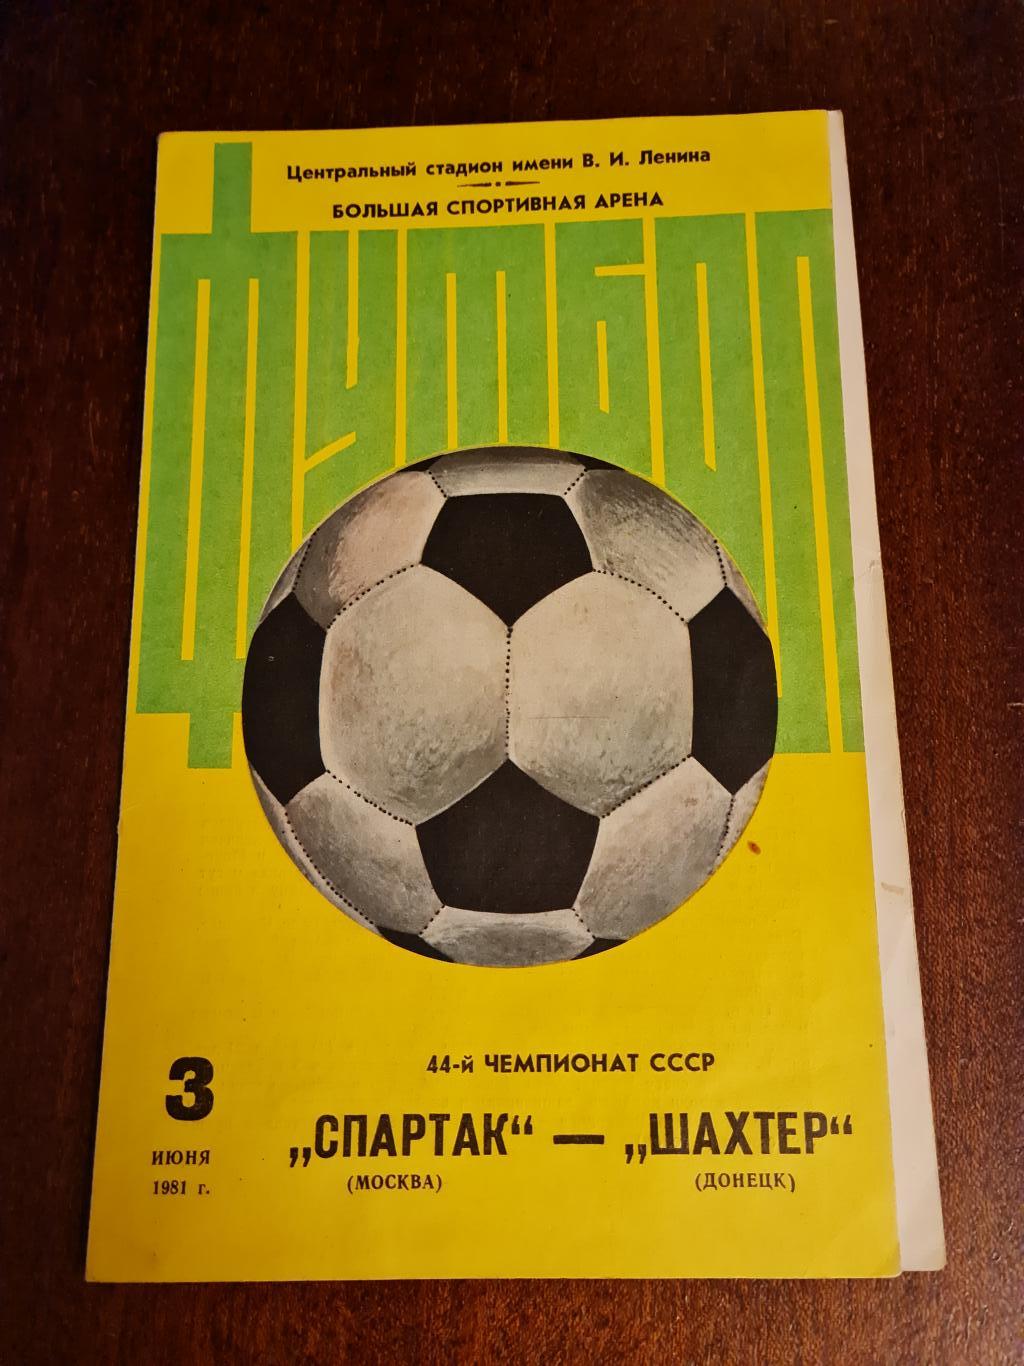 03.06.1981. Спартак- Шахтёр. Программа + билет .